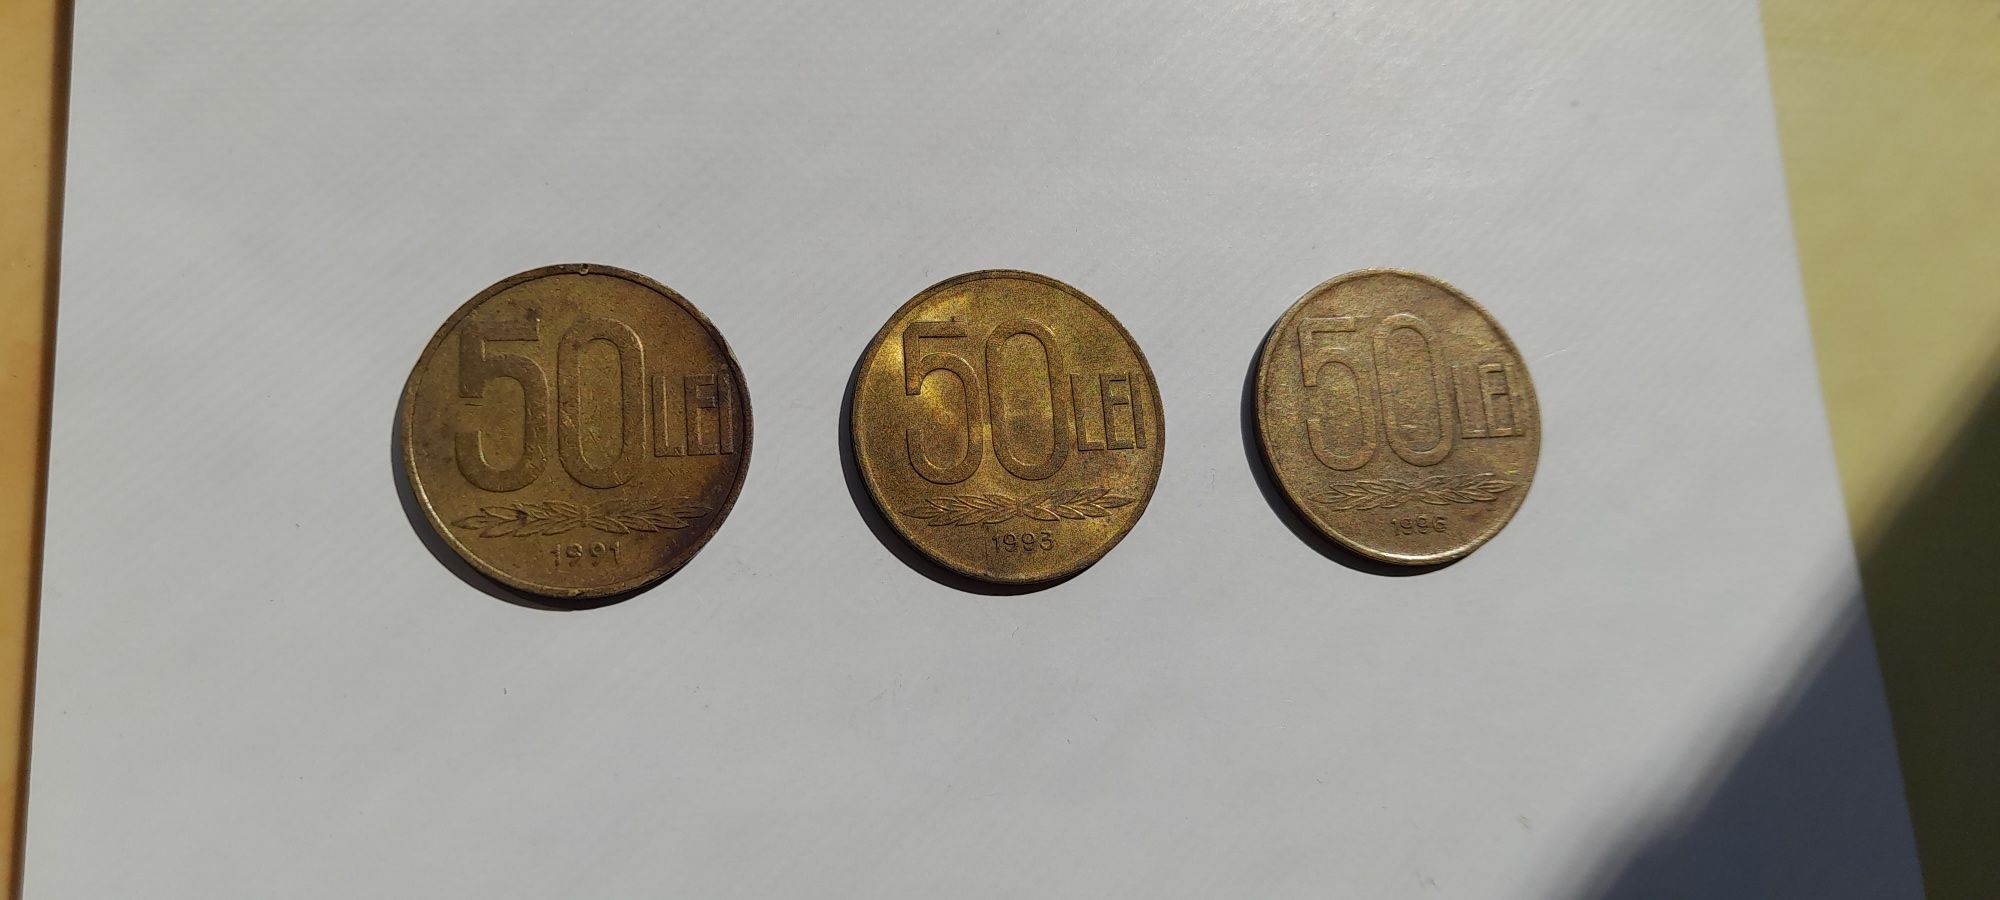 Lot monede România 50 Lei 1991-1996